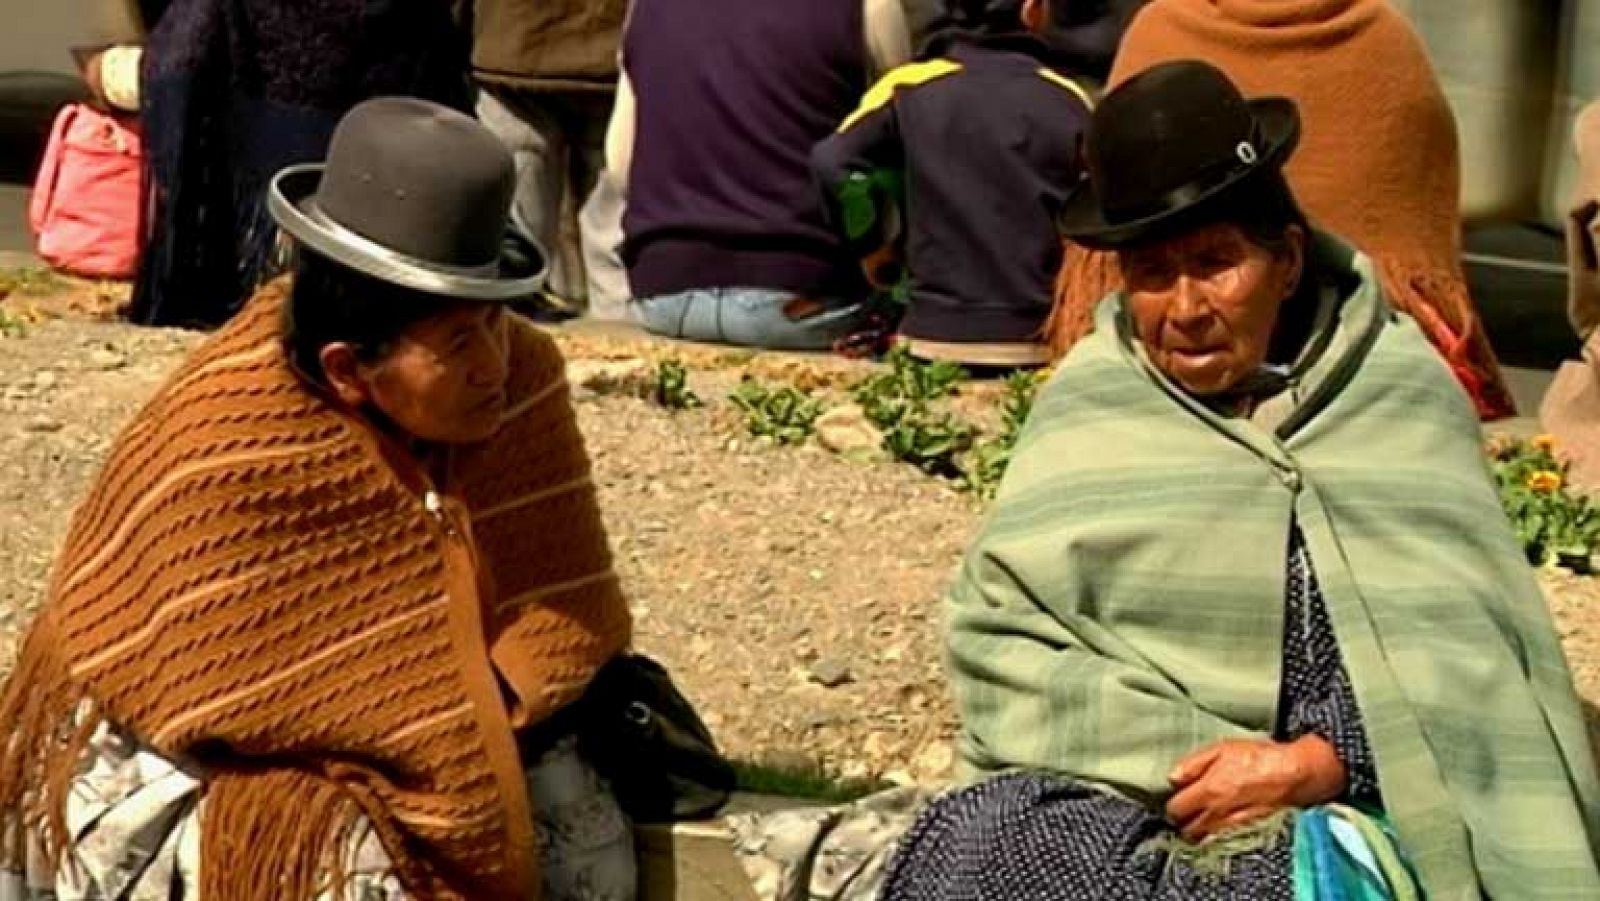 Telediario 1: Lucha contra la pobreza en Bolivia | RTVE Play